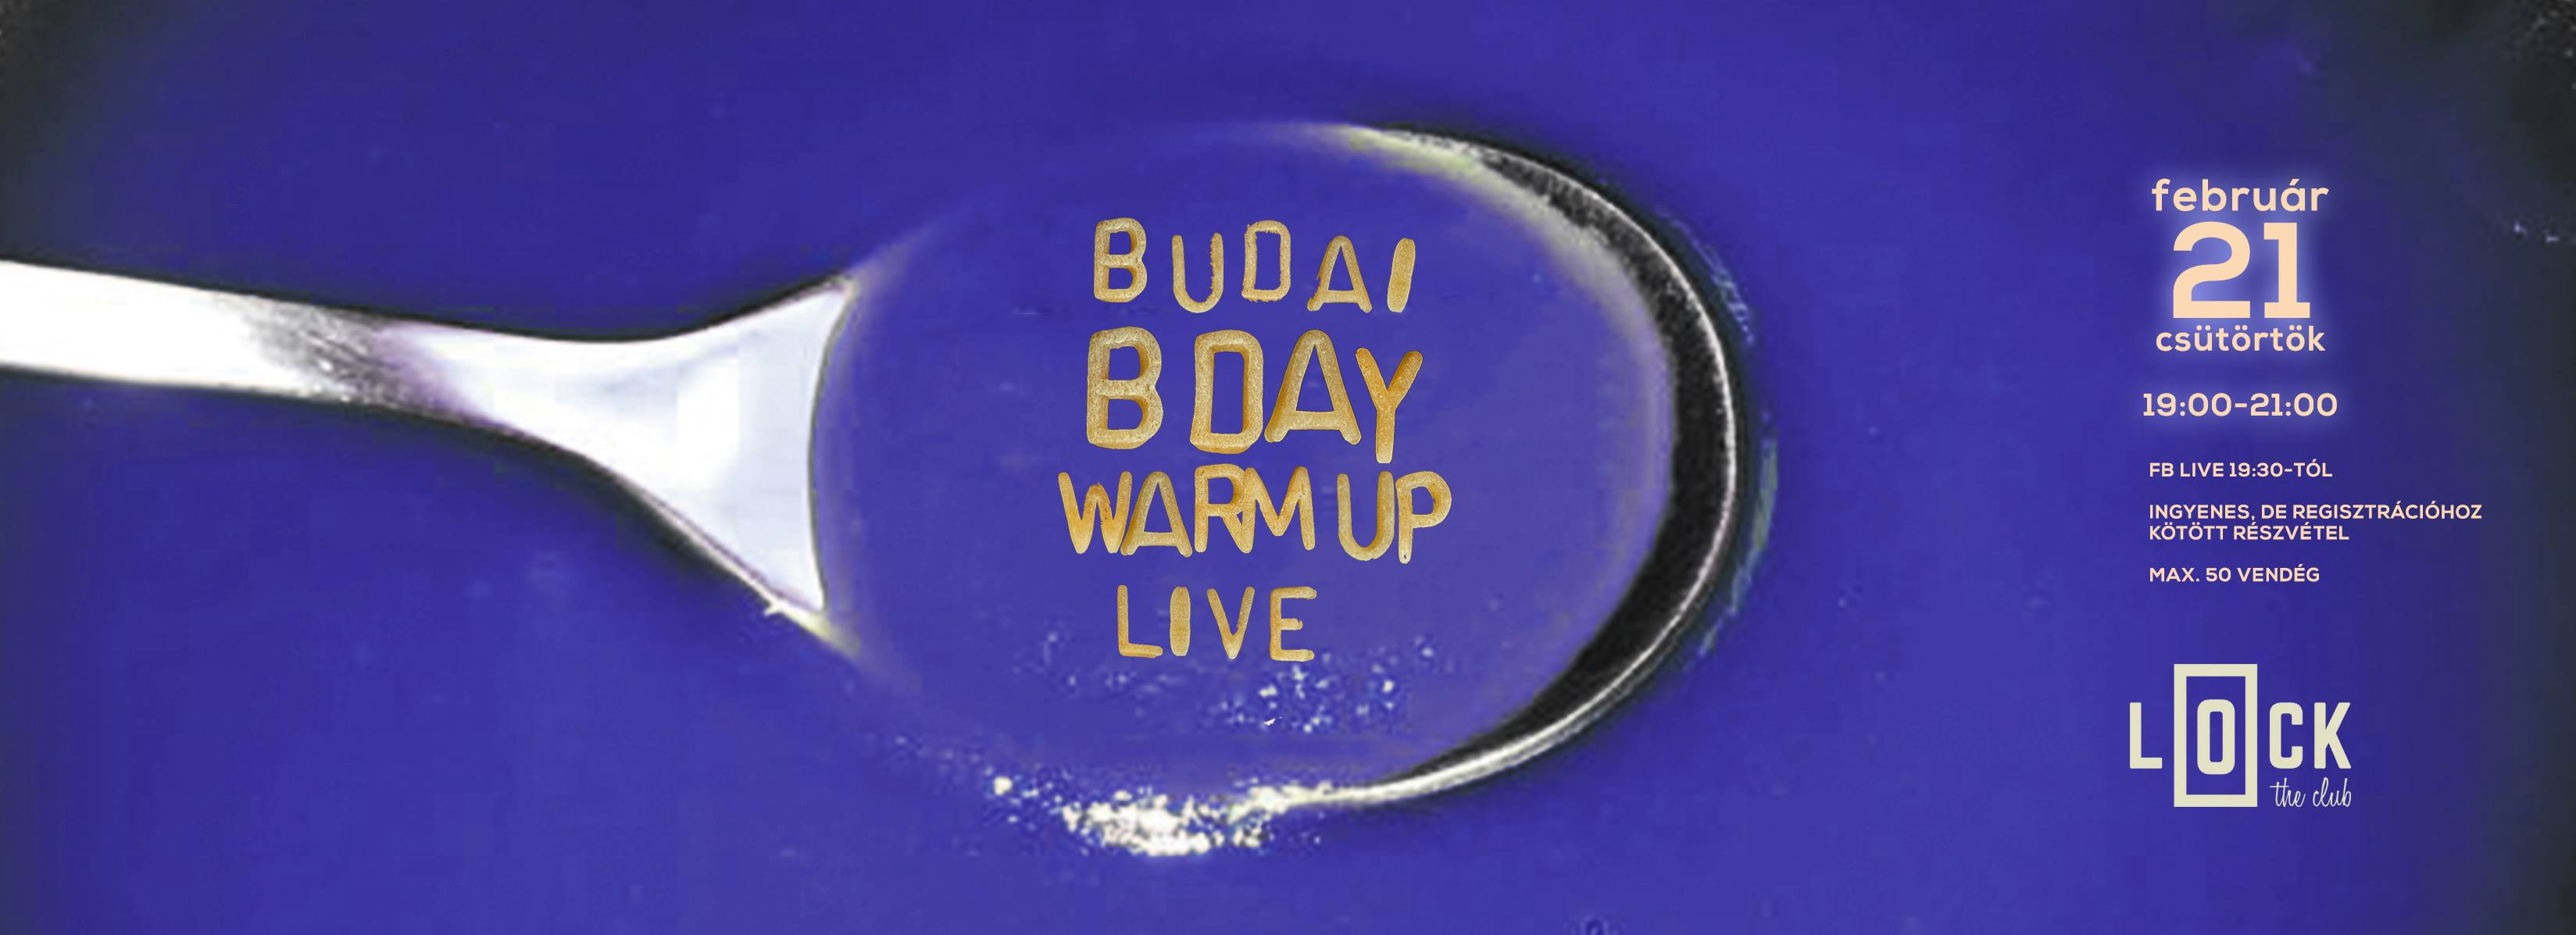 Warm up 2 Budai Bday + Live